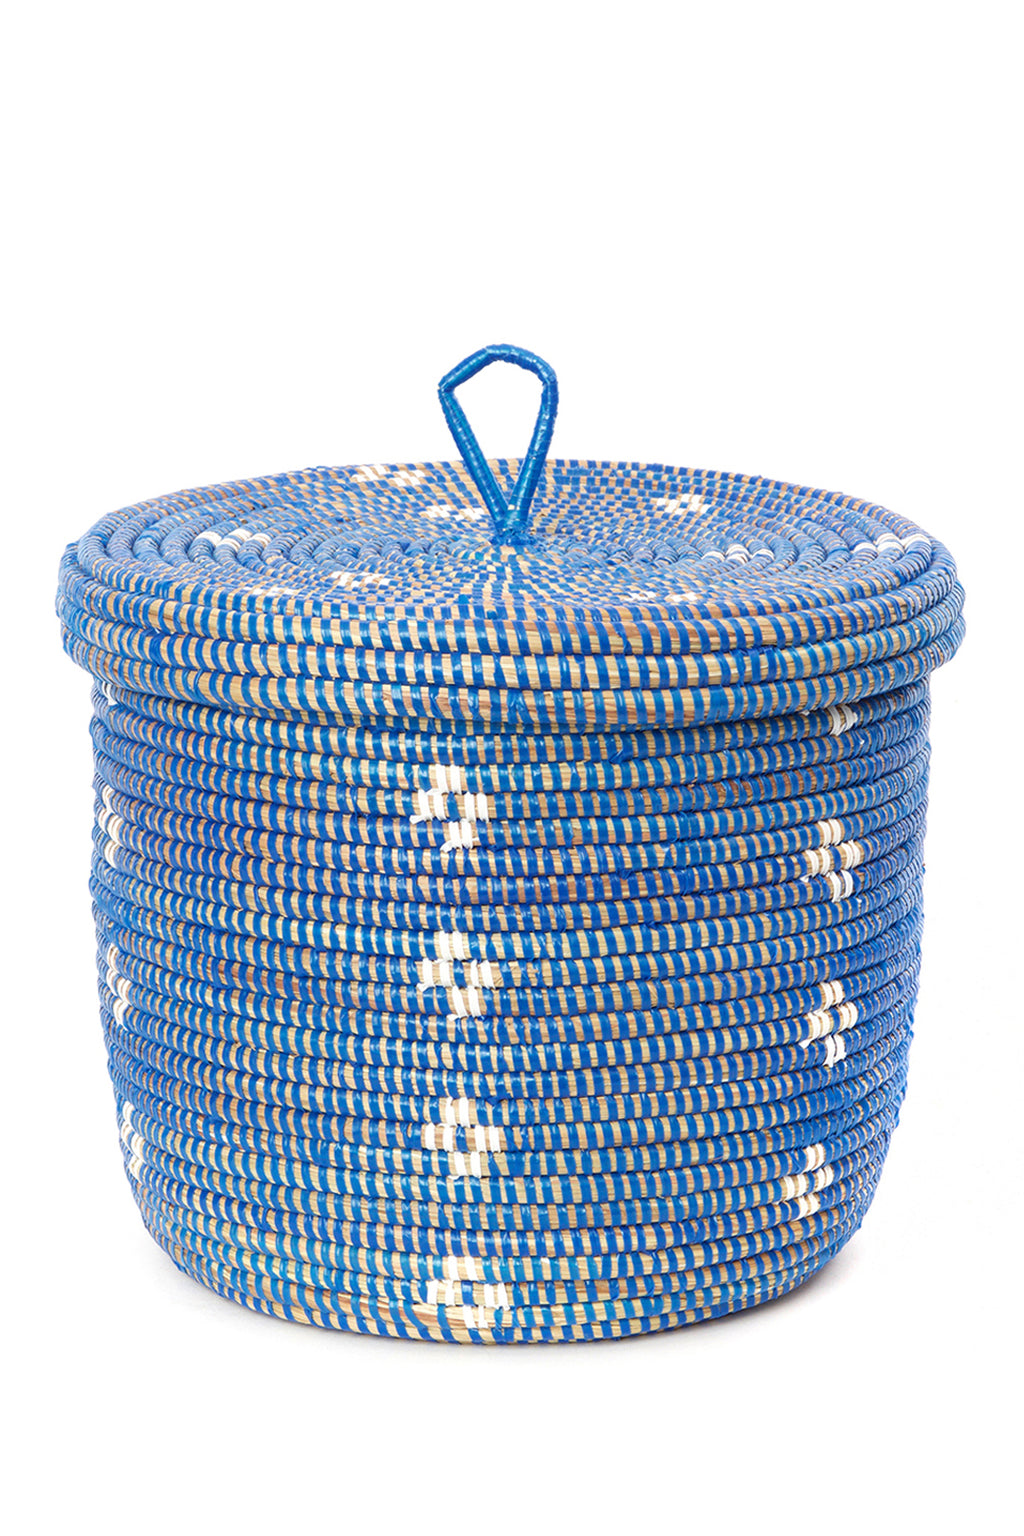 Blue and White Blossom Lidded Storage Basket